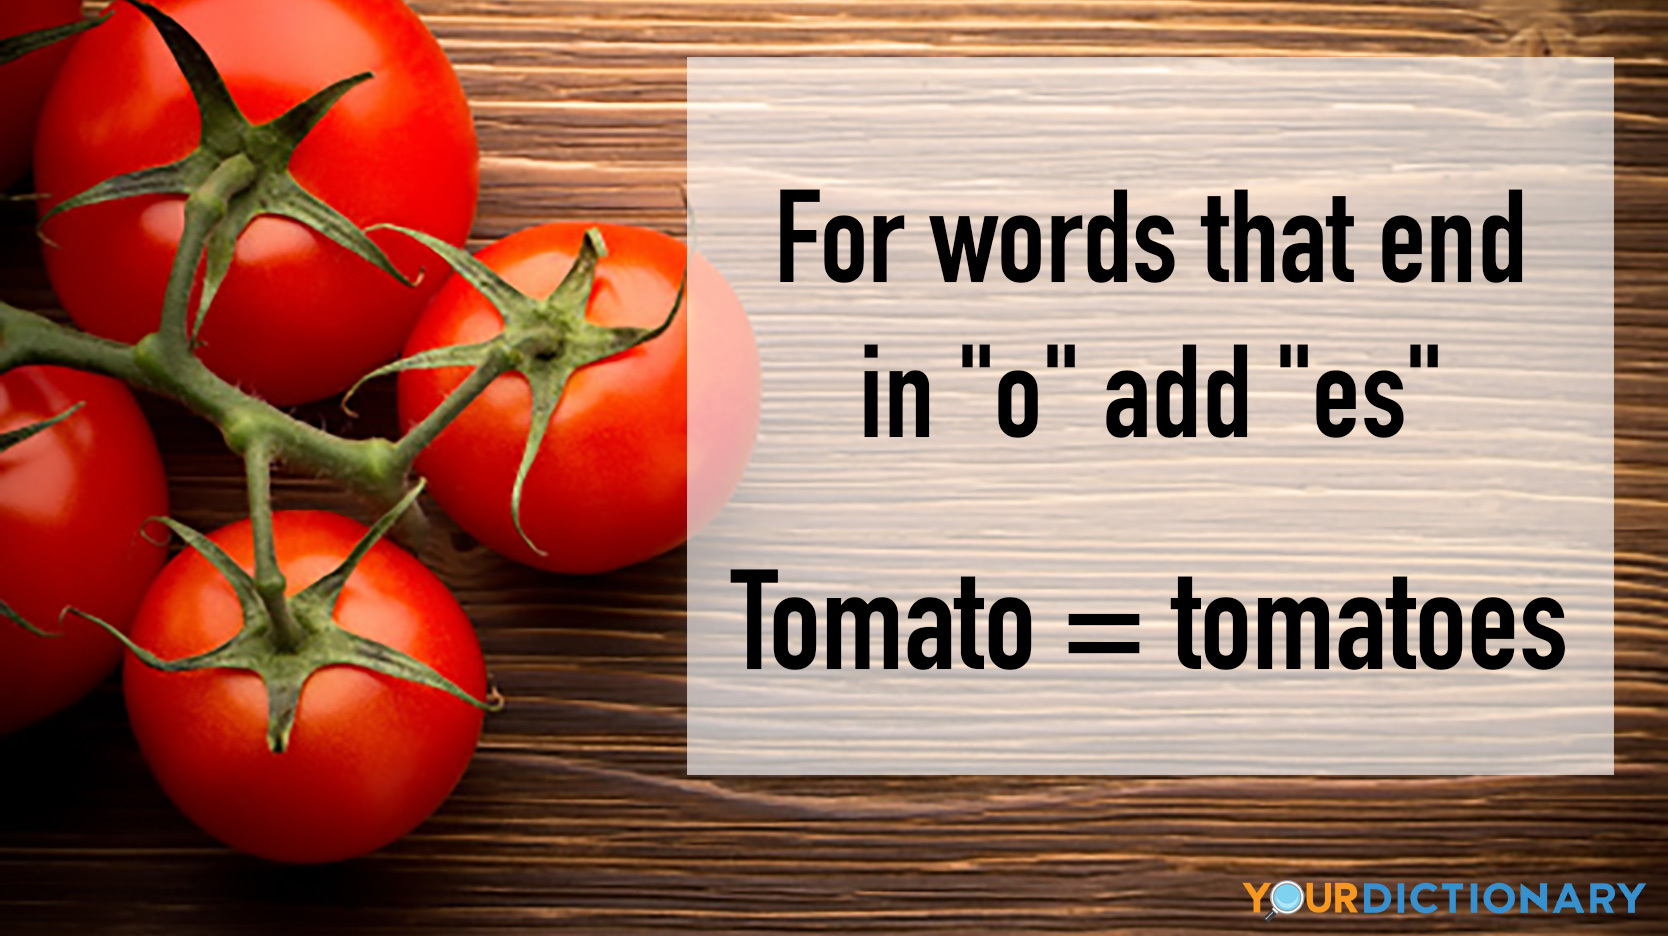 irregular plural noun tomato tomatoes